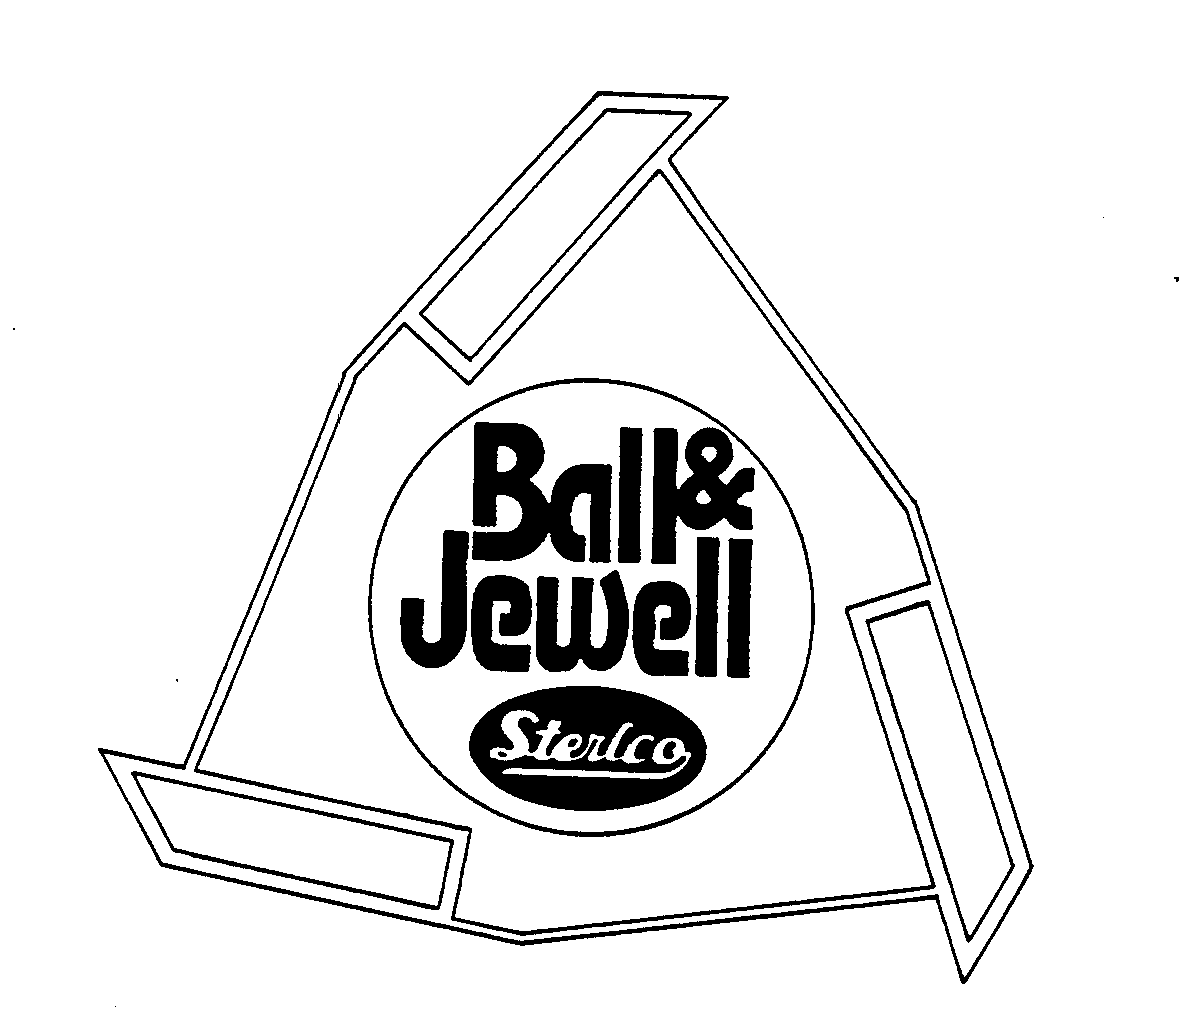  BALL &amp; JEWELL STERLCO